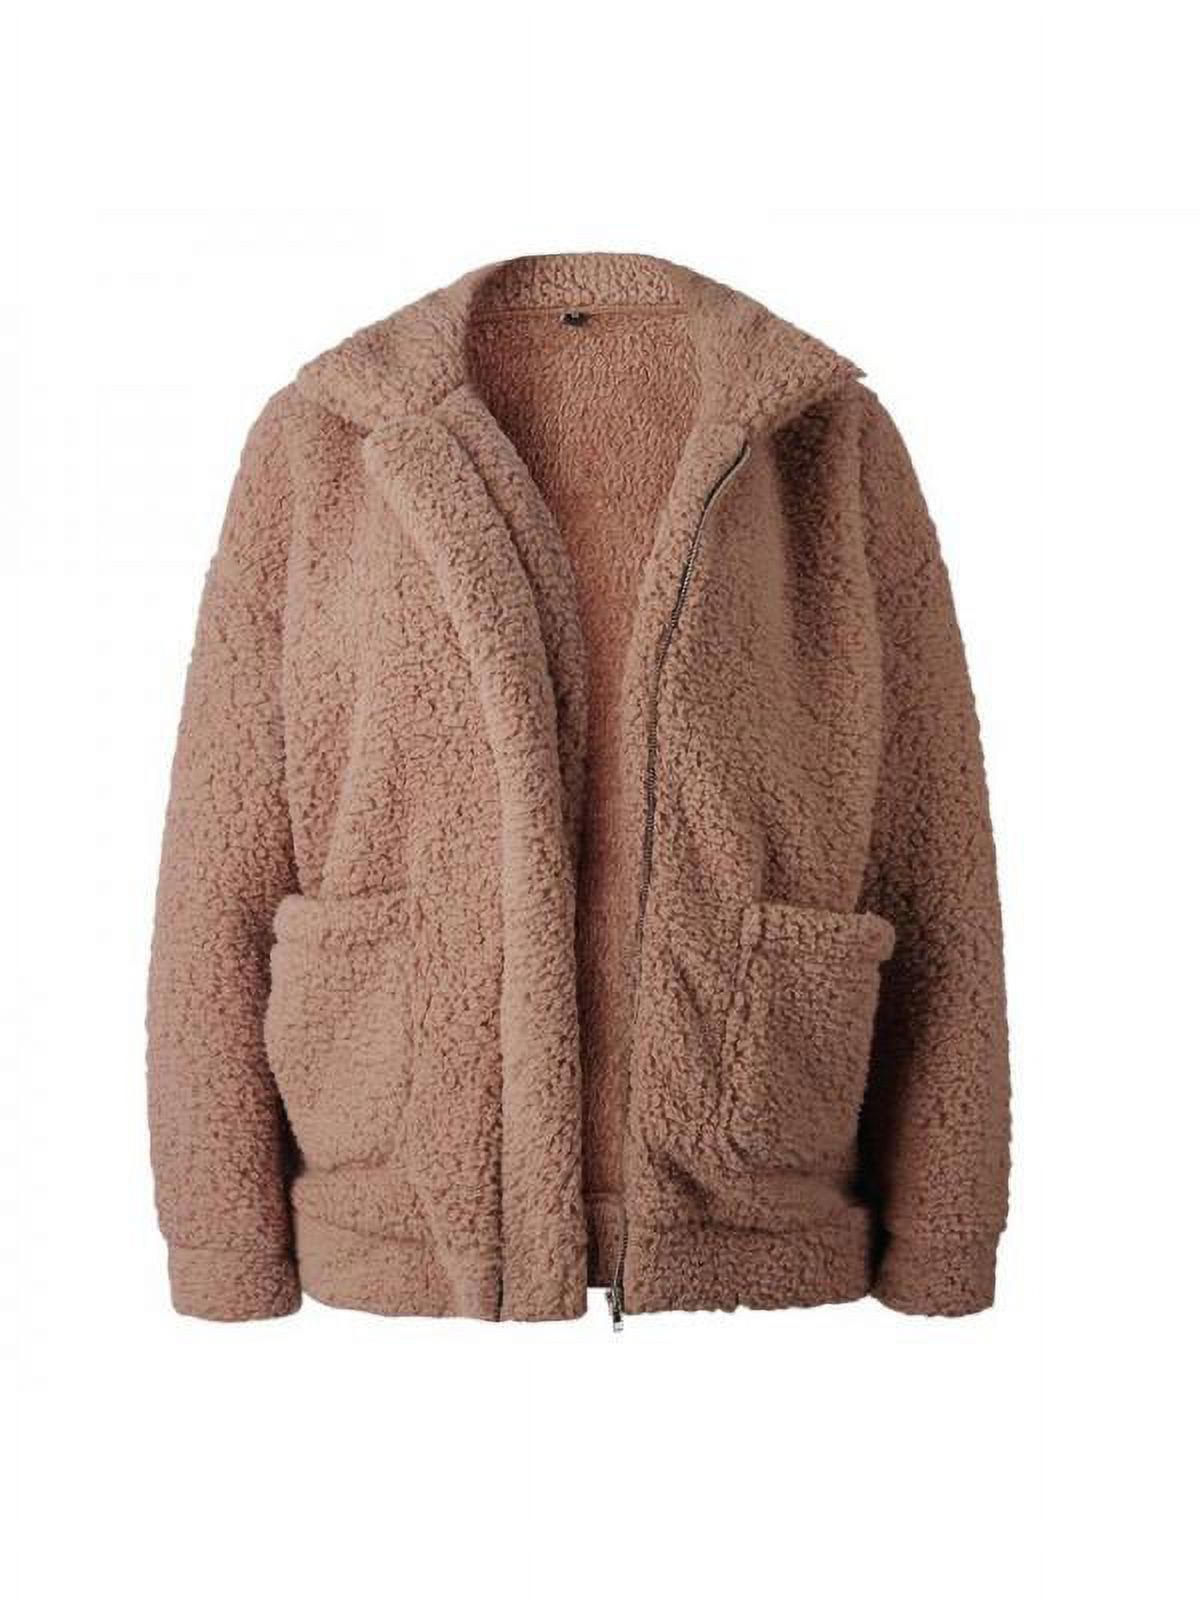 Women Fashionable Loose Lapel Cozy Jacket Coat Long Sleeve Autumn Winter Warm Zipper Plush Outwear - image 1 of 6